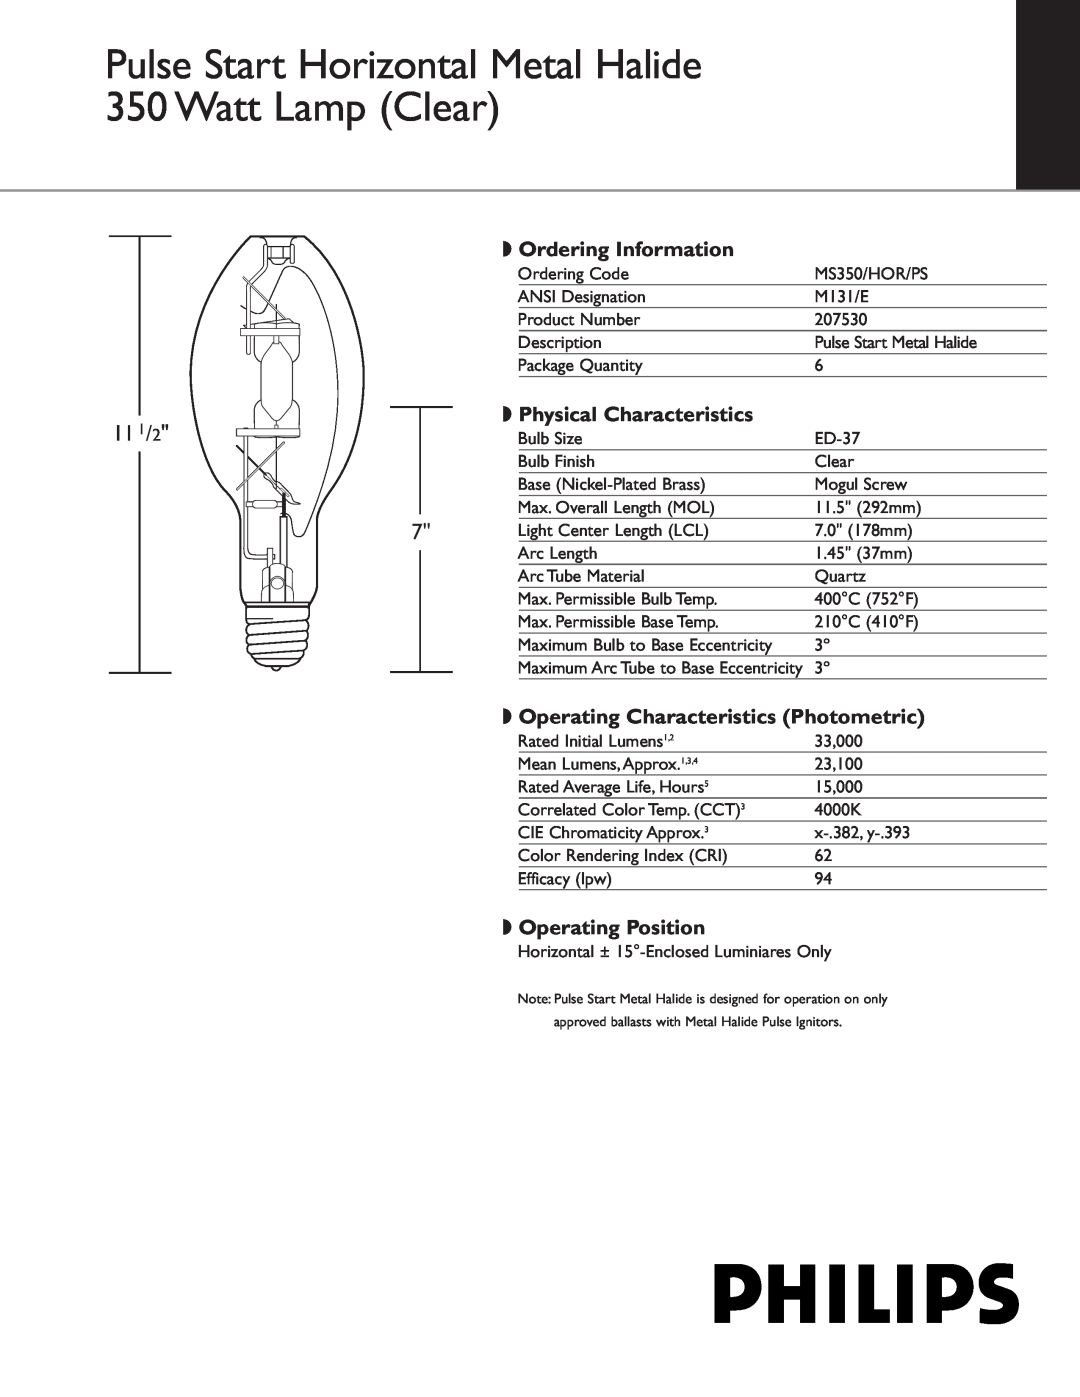 Philips 207530 manual 11 1/2, Ordering Information, Physical Characteristics, Operating Characteristics Photometric 